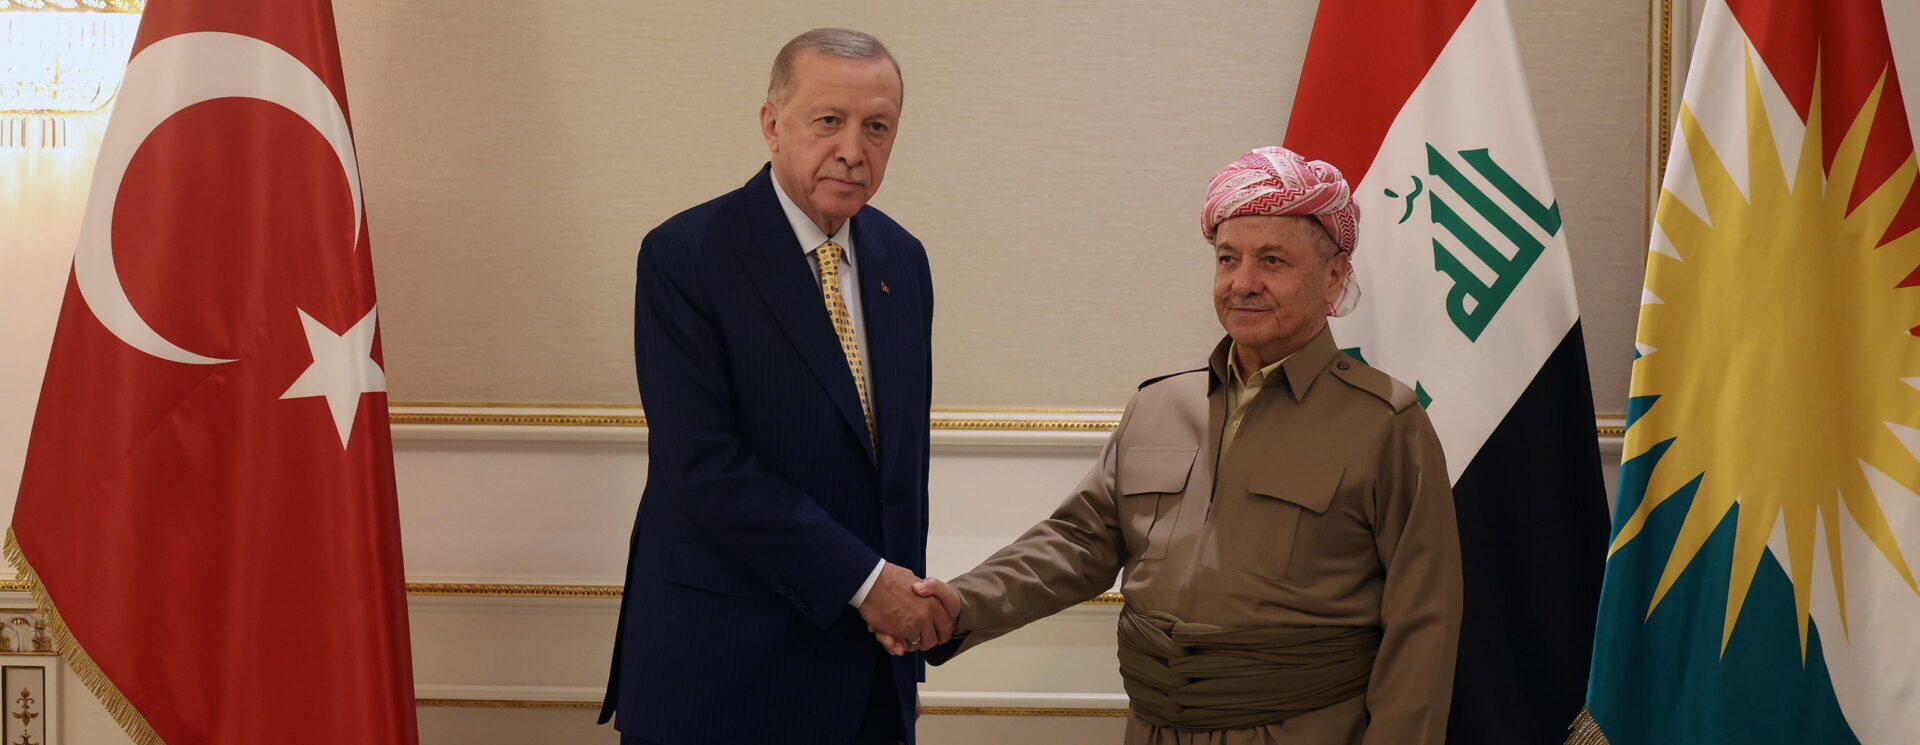 Erdogan si prende l’Iraq e rilancia la sua guerra al Pkk